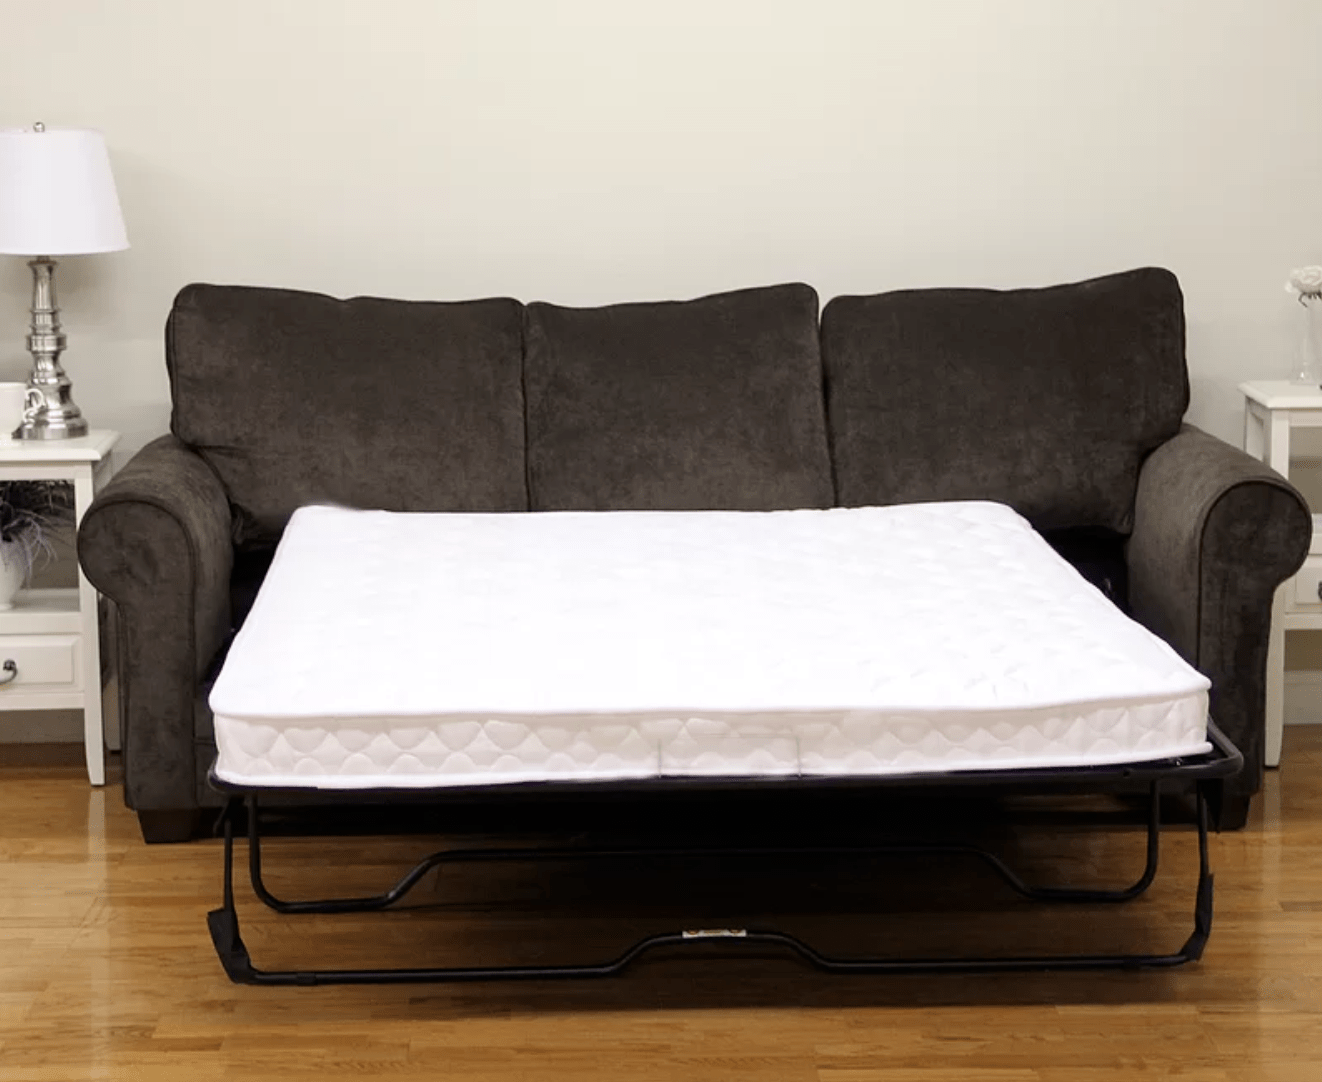 mattress fit and furniture